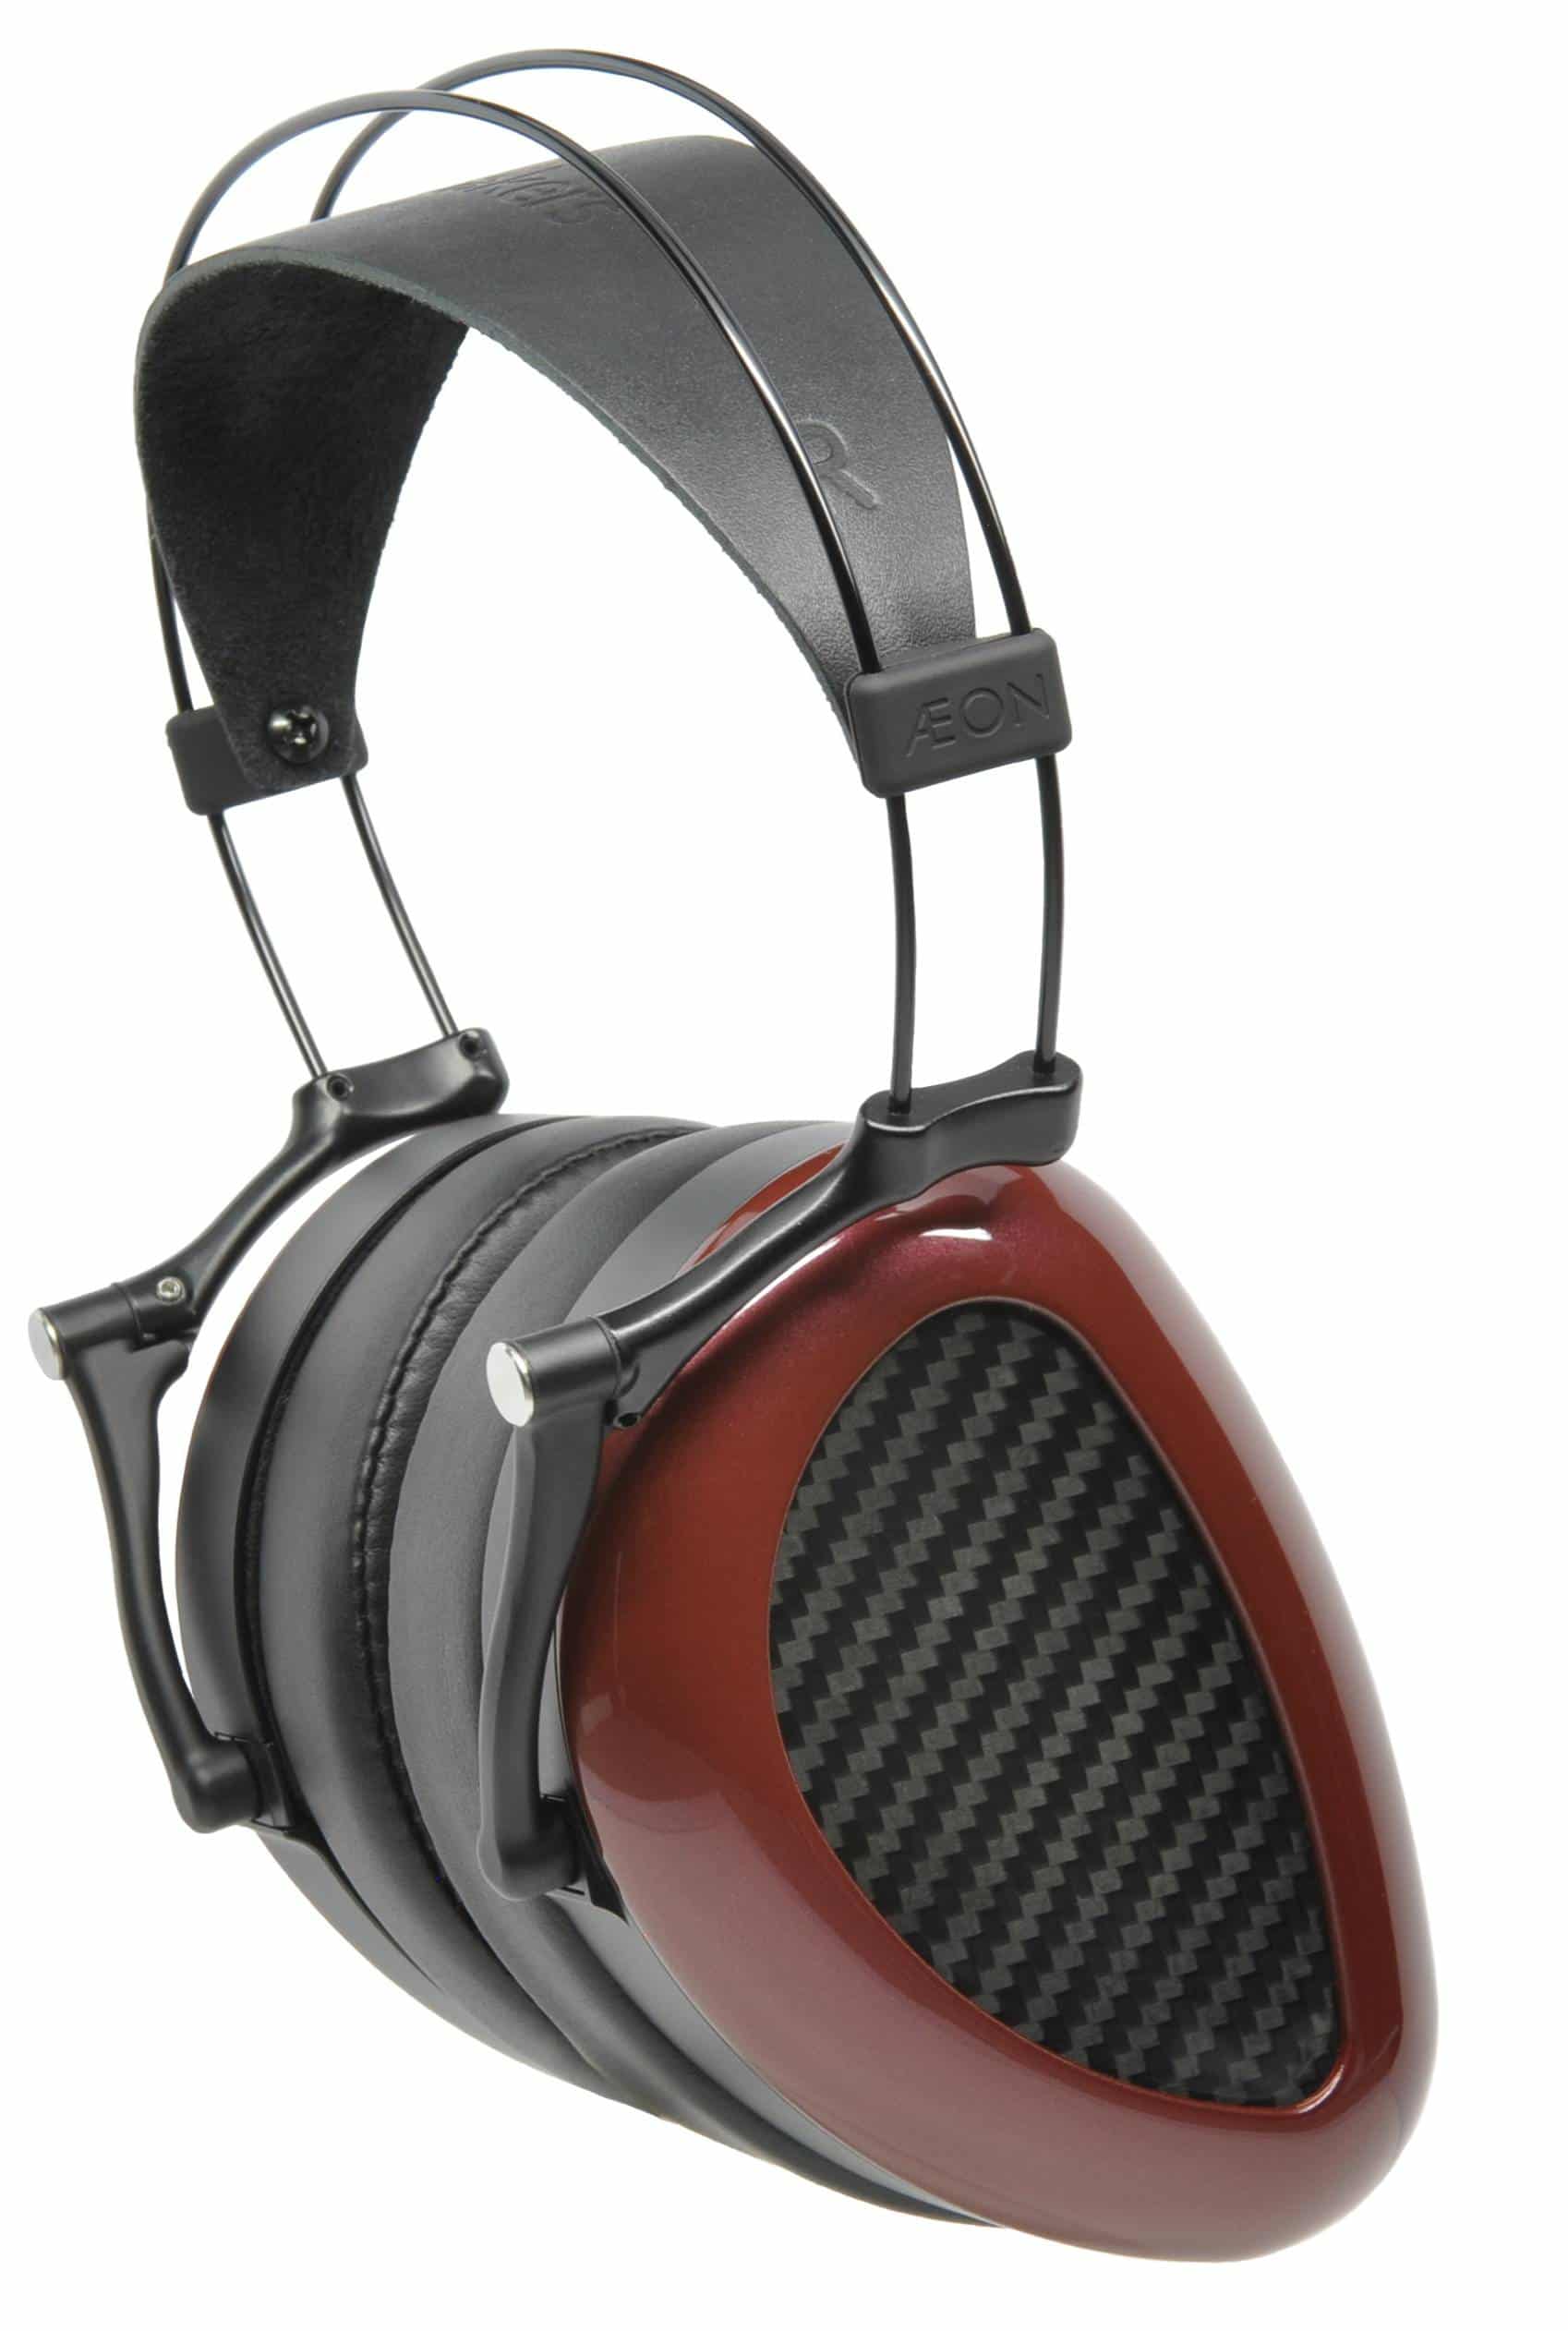 Aeon 2 headphone from Dan Clark Audio